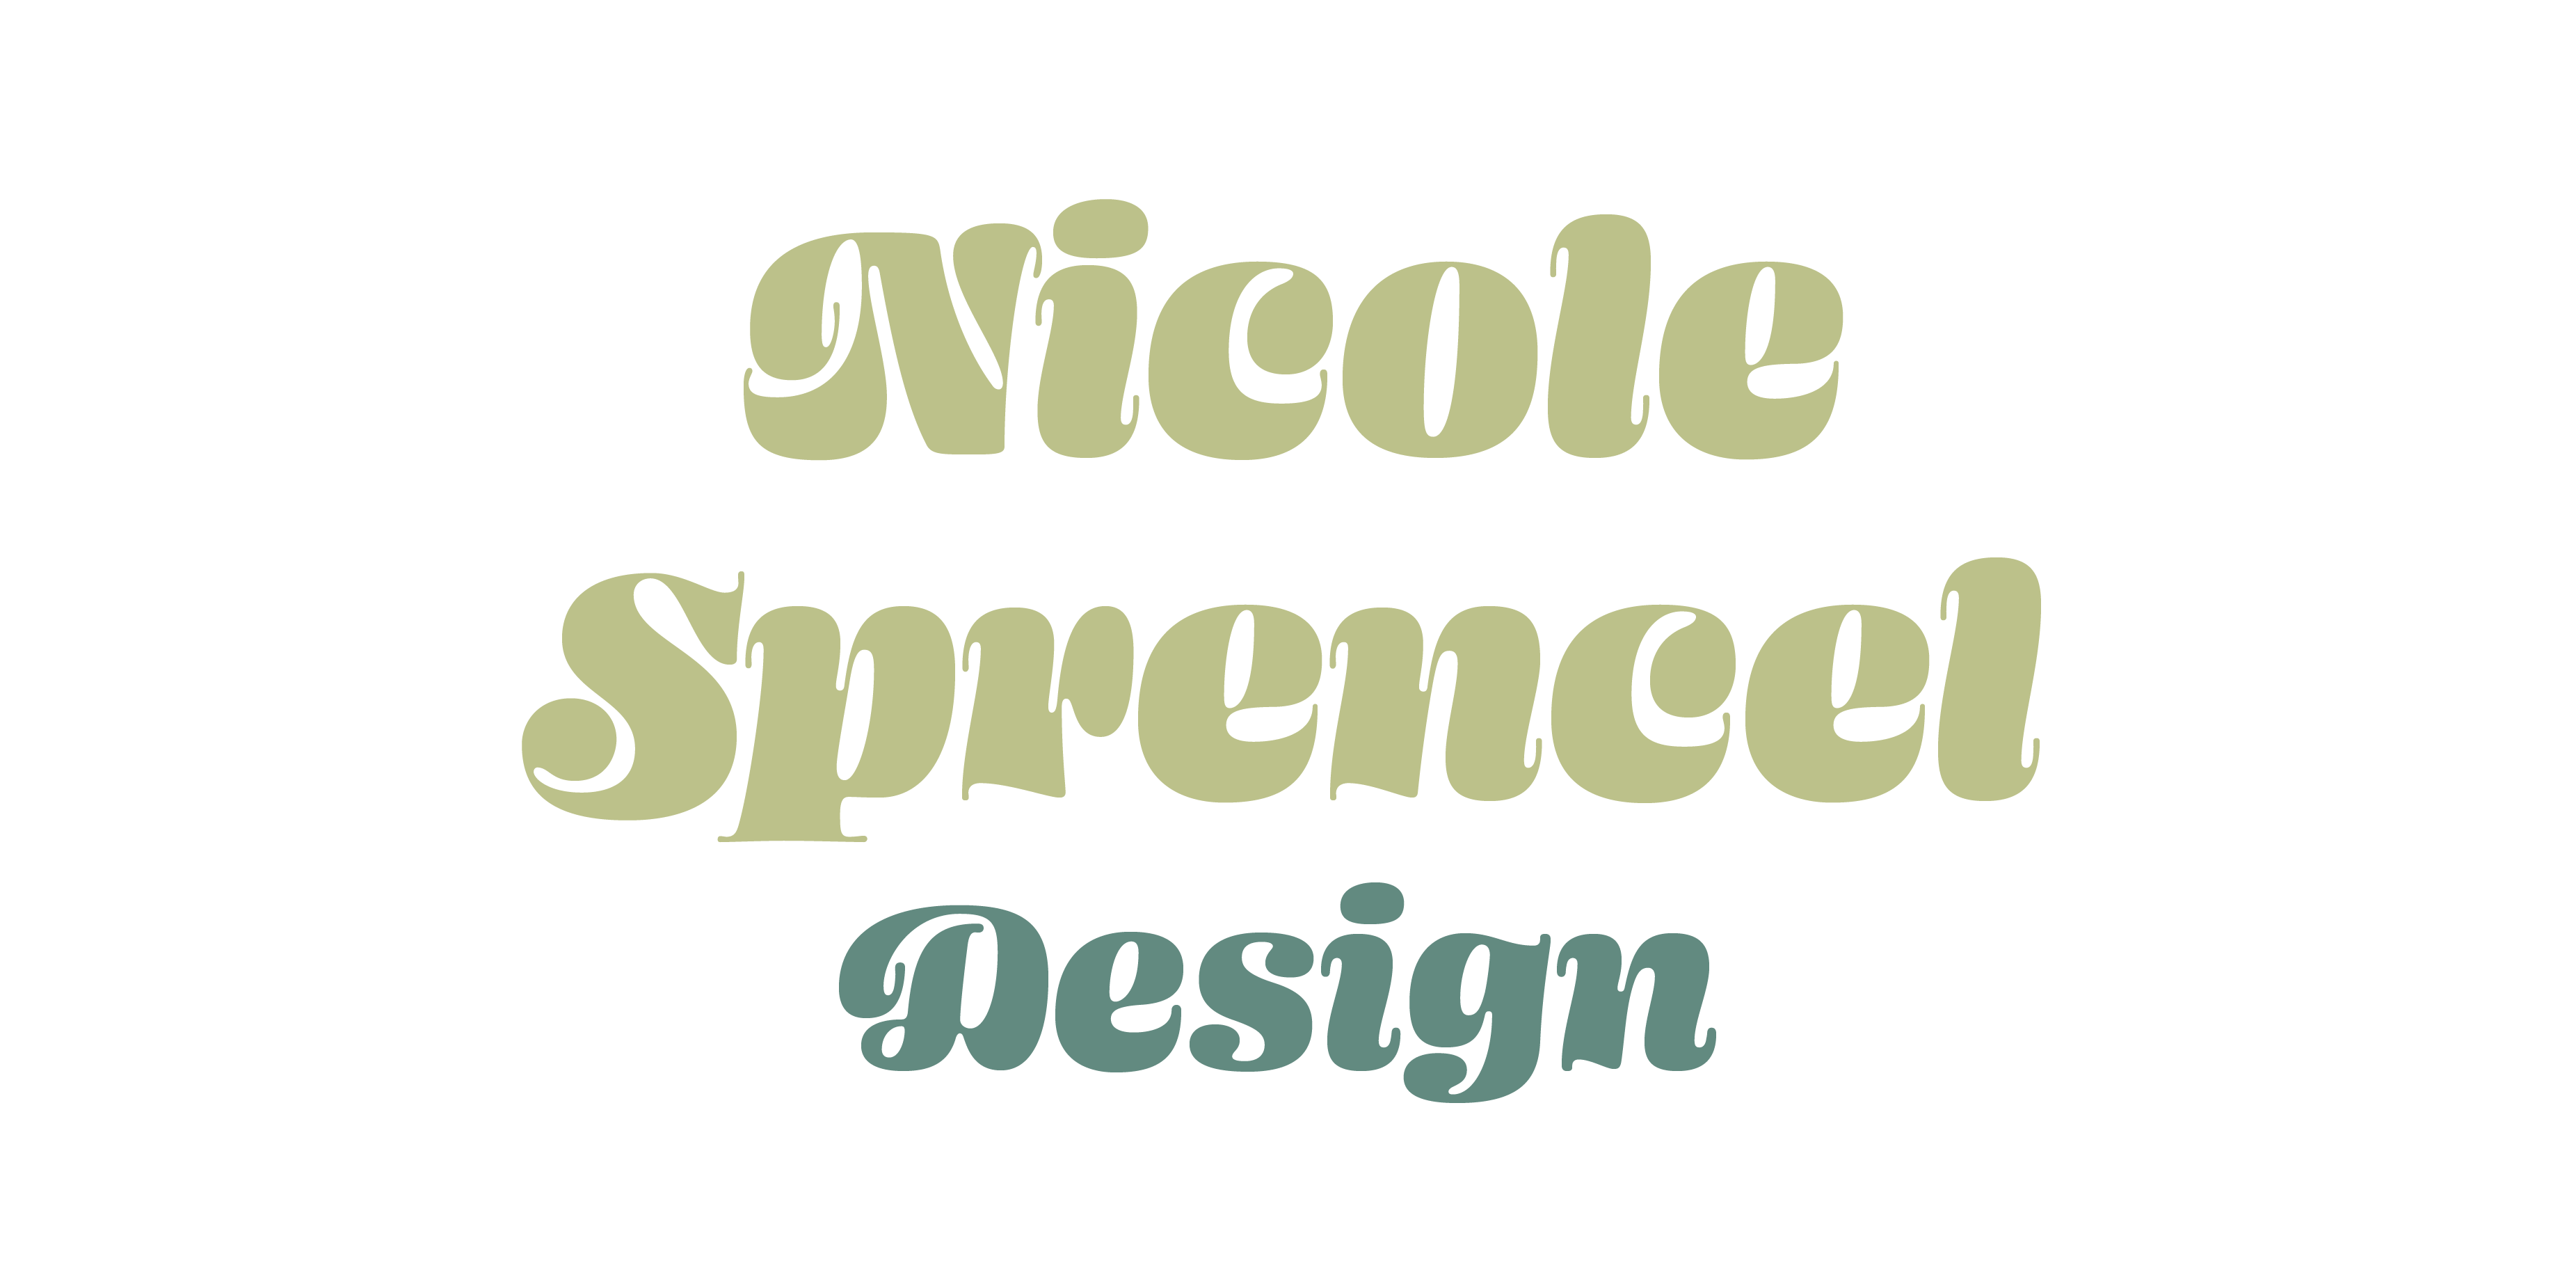 Nicole Sprencel